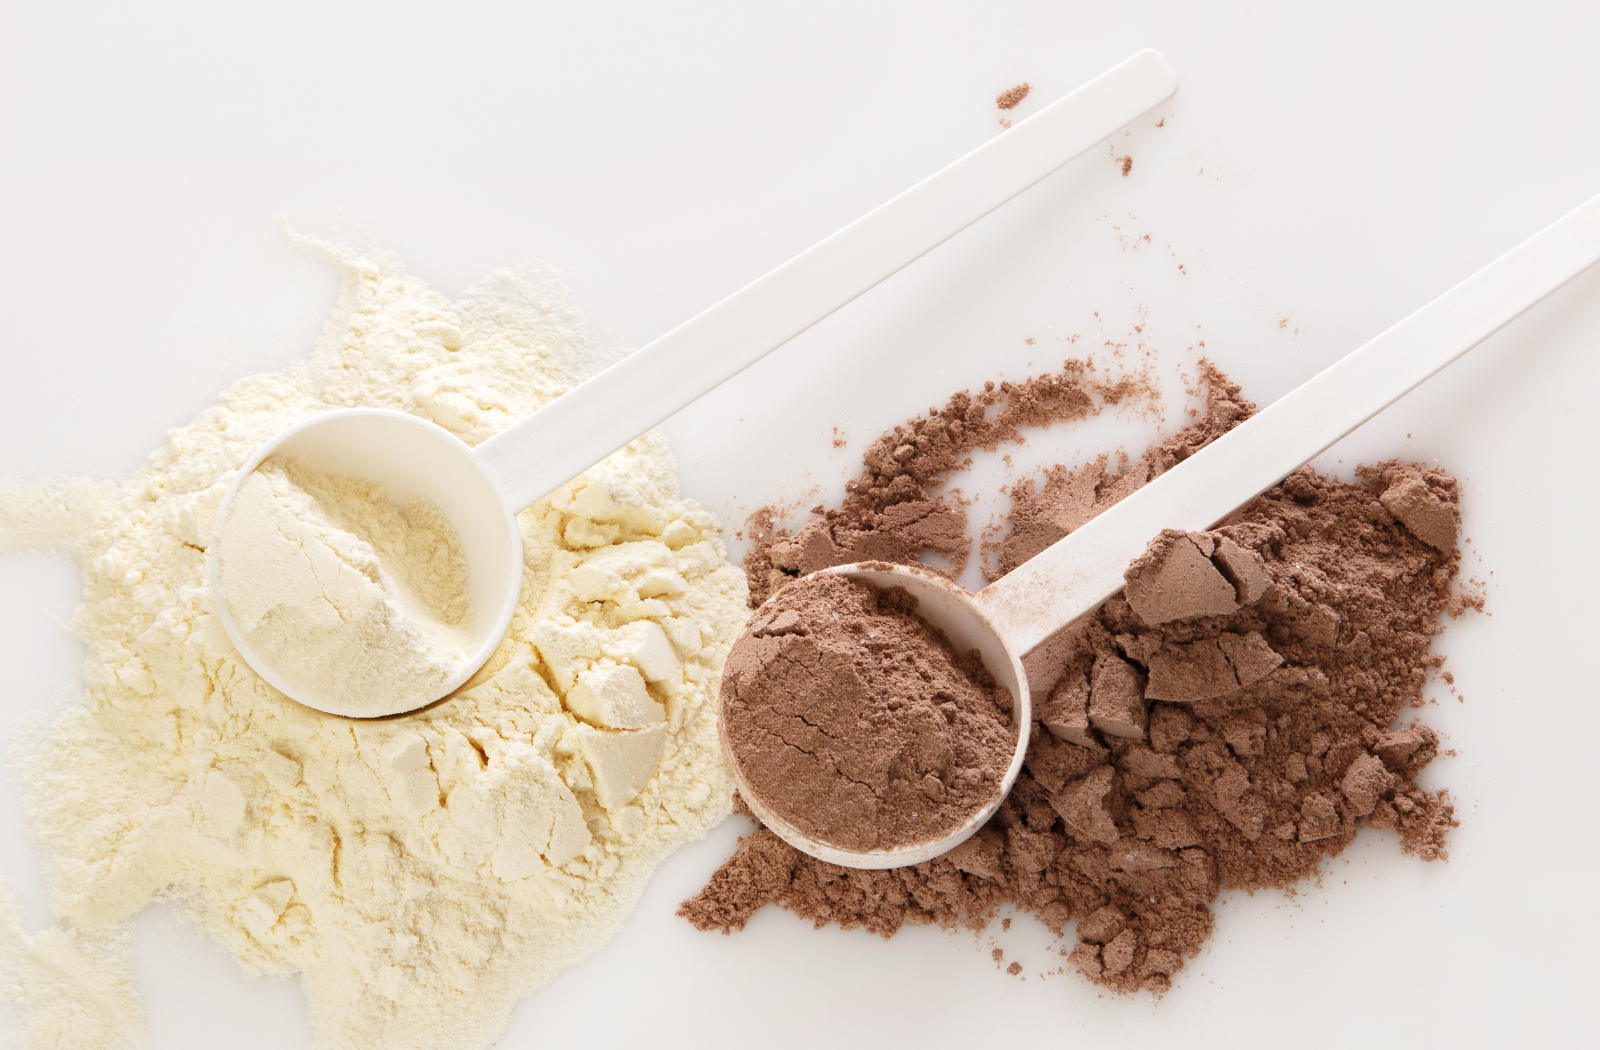 egg white powder chocolate vanilla unflavored - sharrets nutritions